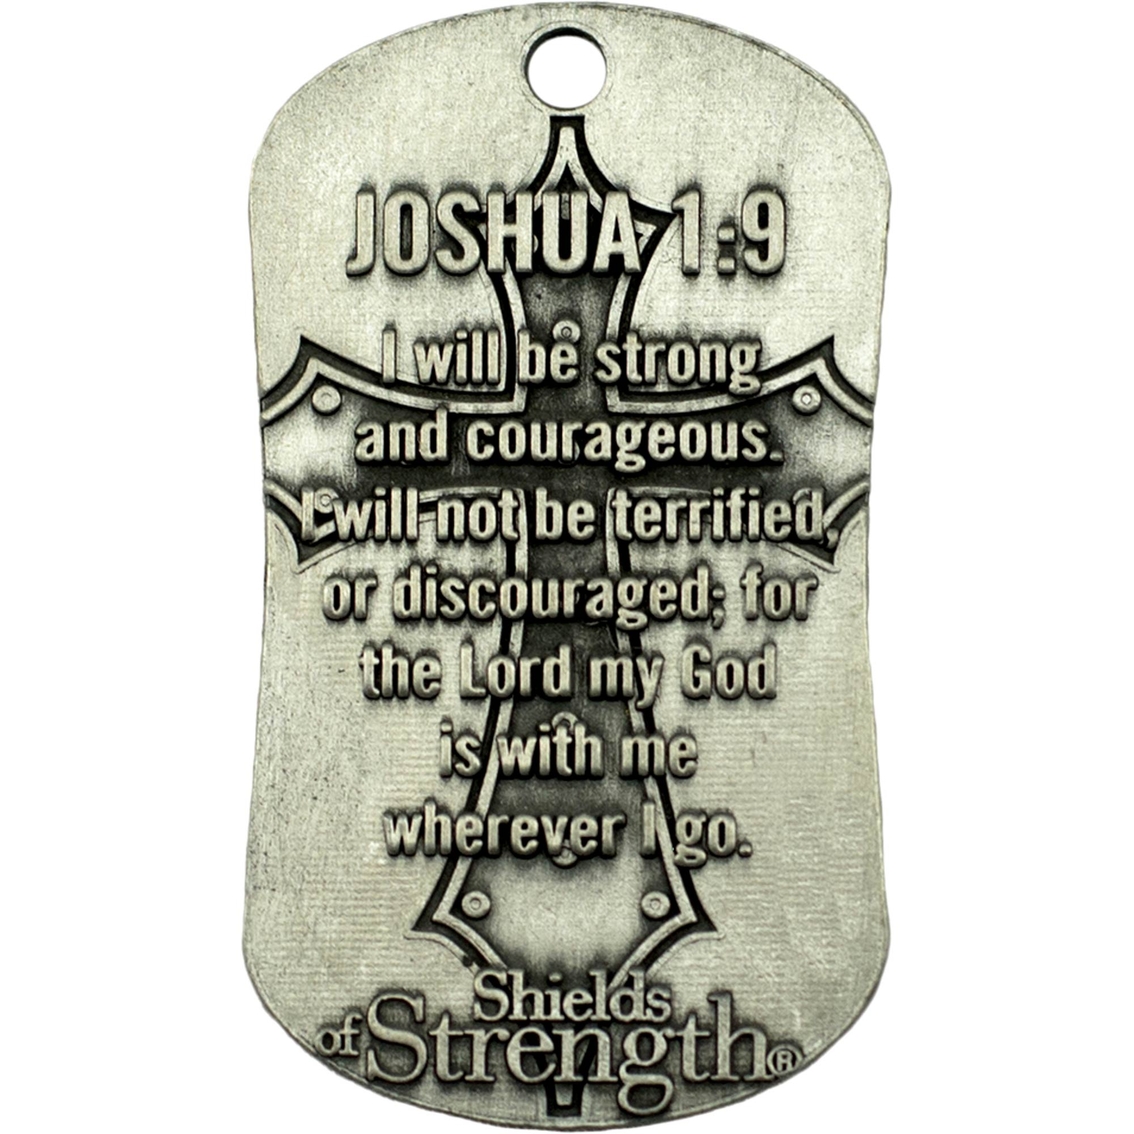 Shields of Strength Veteran Antique Finish Dog Tag Necklace, Joshua 1:9 - Image 2 of 2